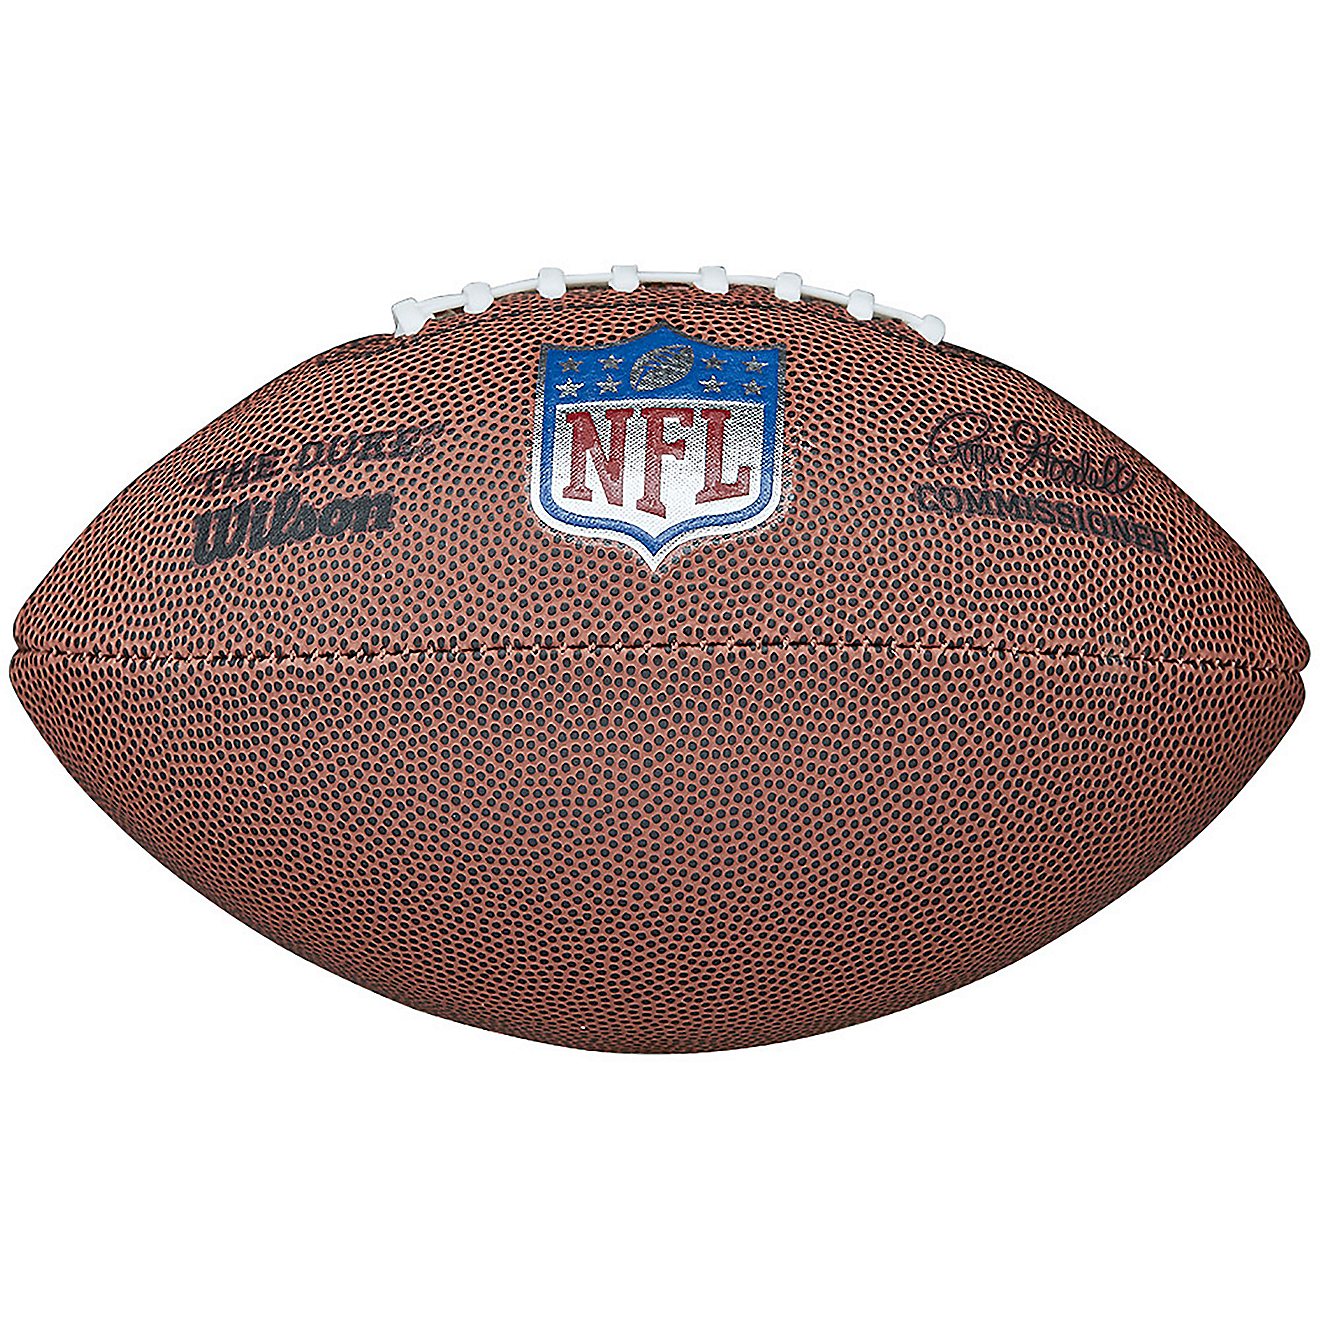 Wilson NFL Replica The Duke Mini Football                                                                                        - view number 5